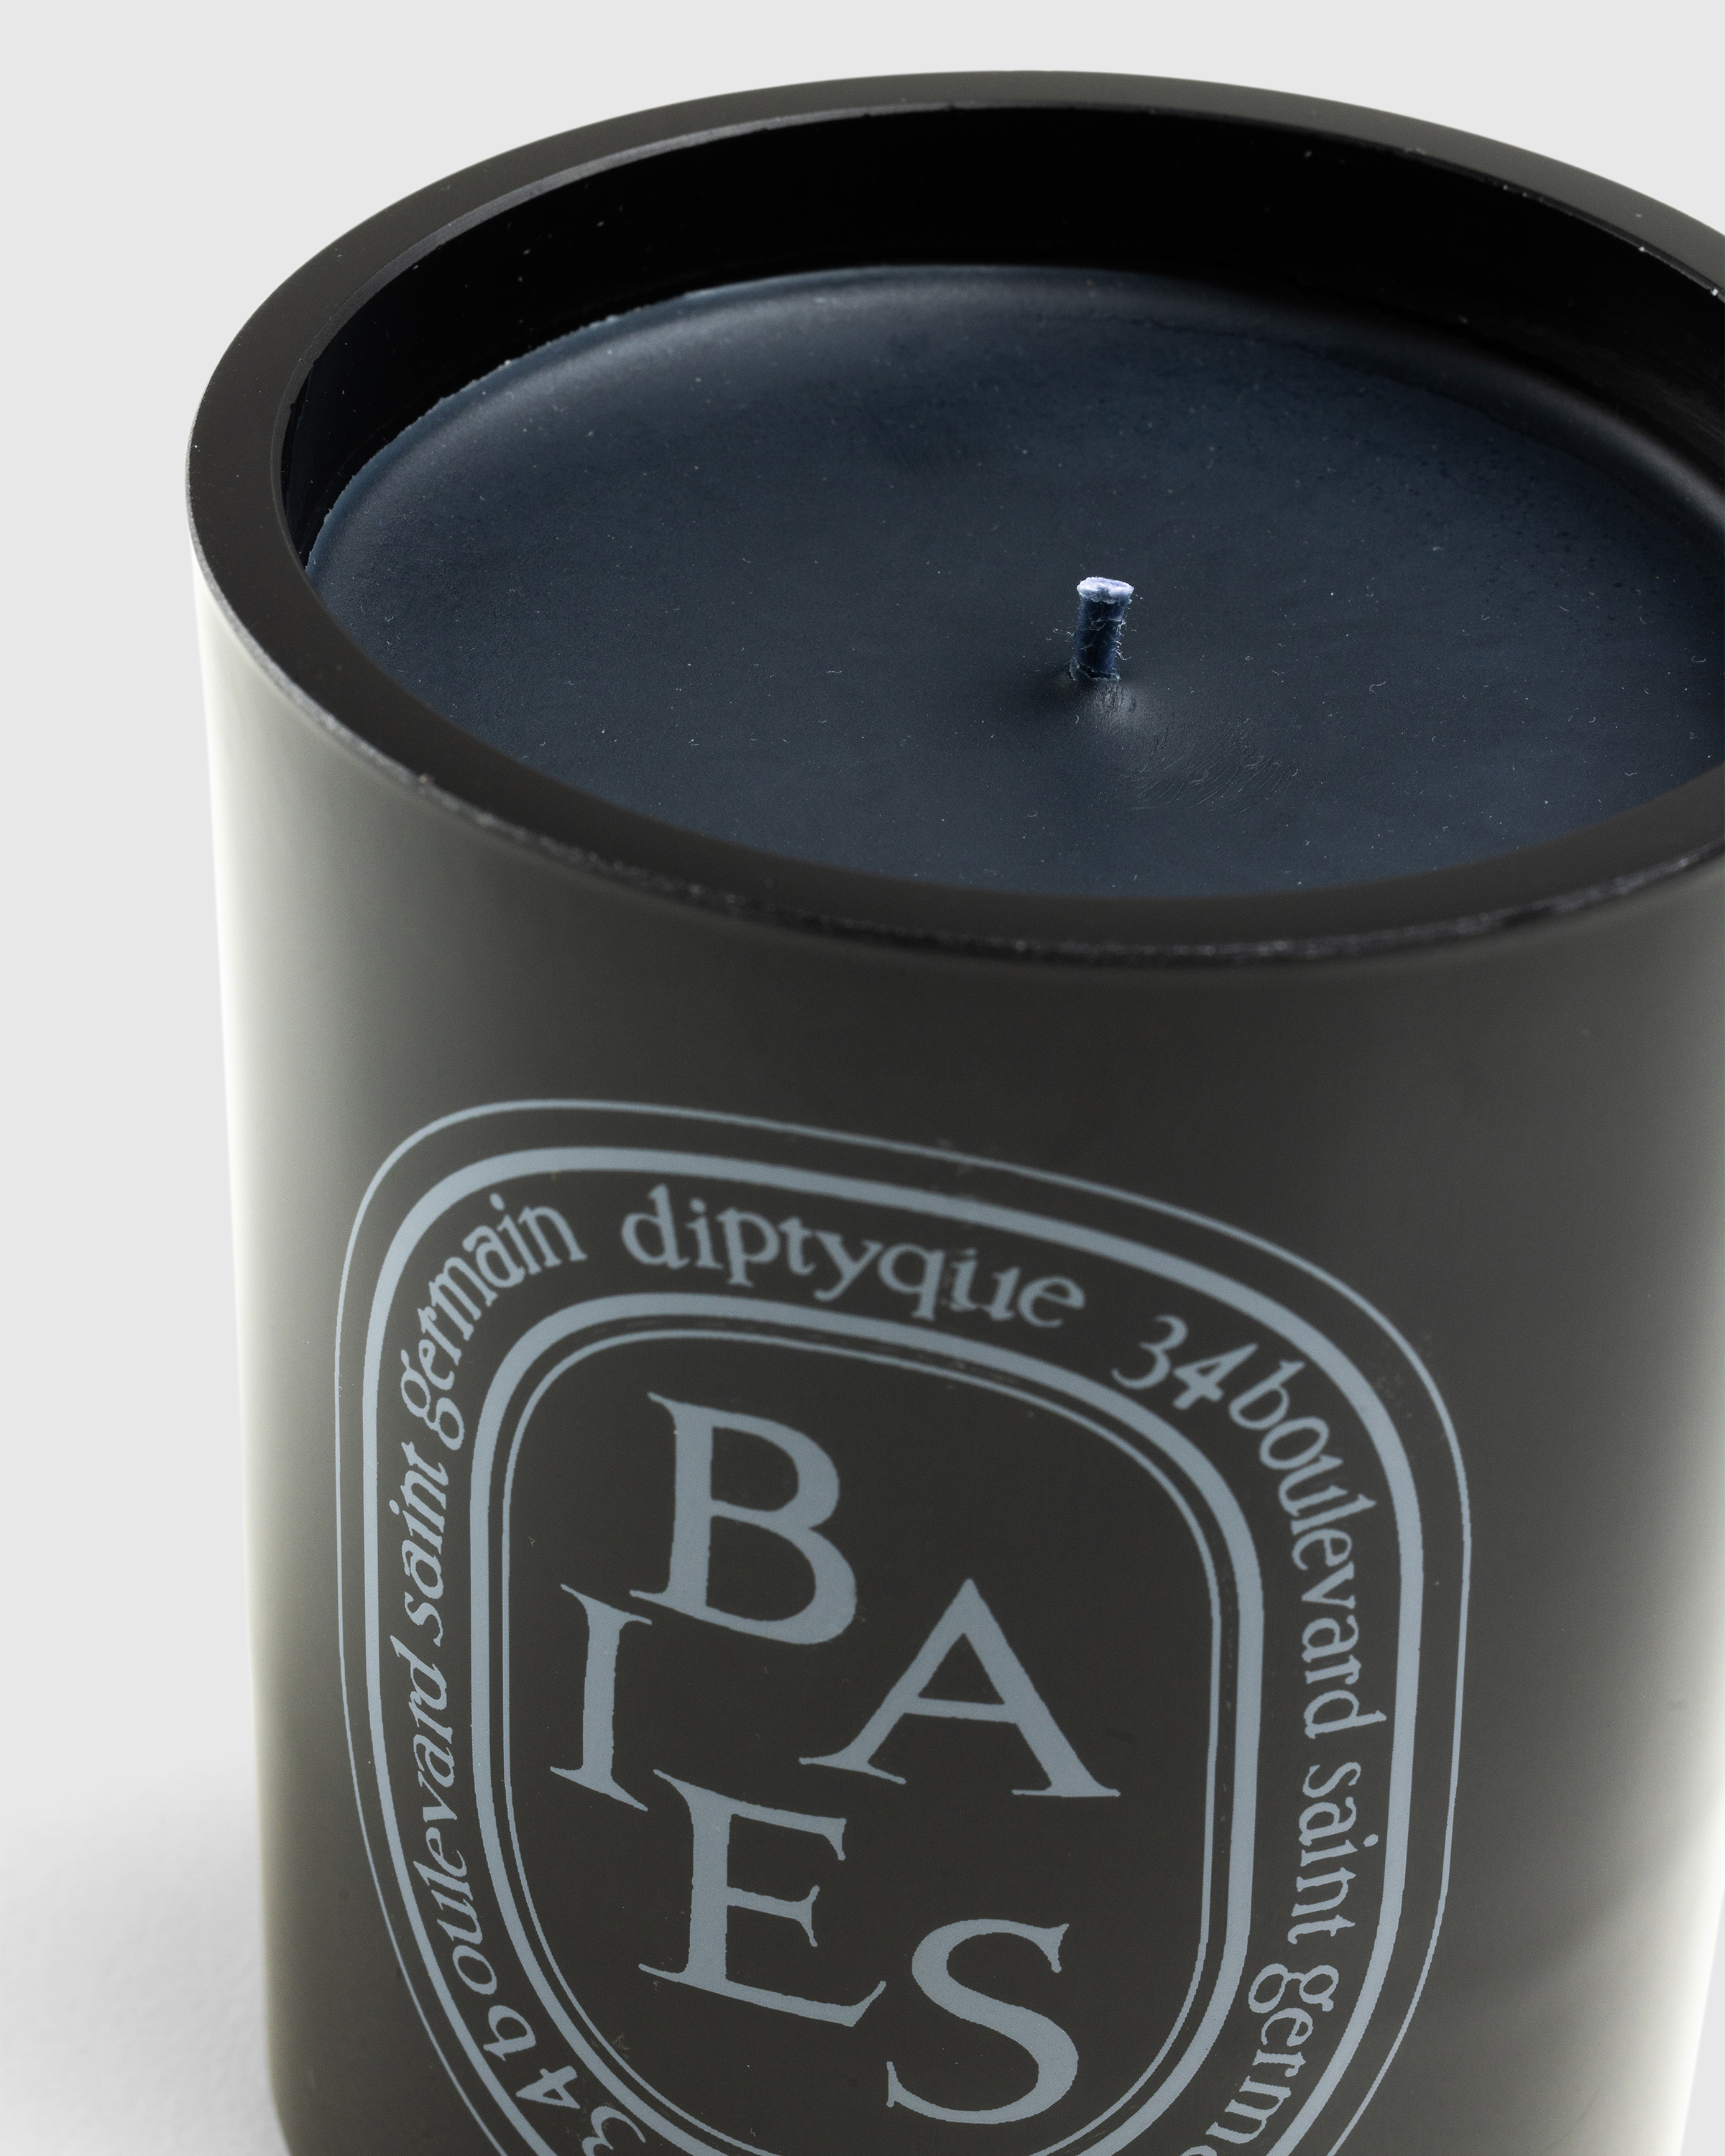 Diptyque – Black Candle Baies 300g - Candles & Fragrances - Black - Image 2